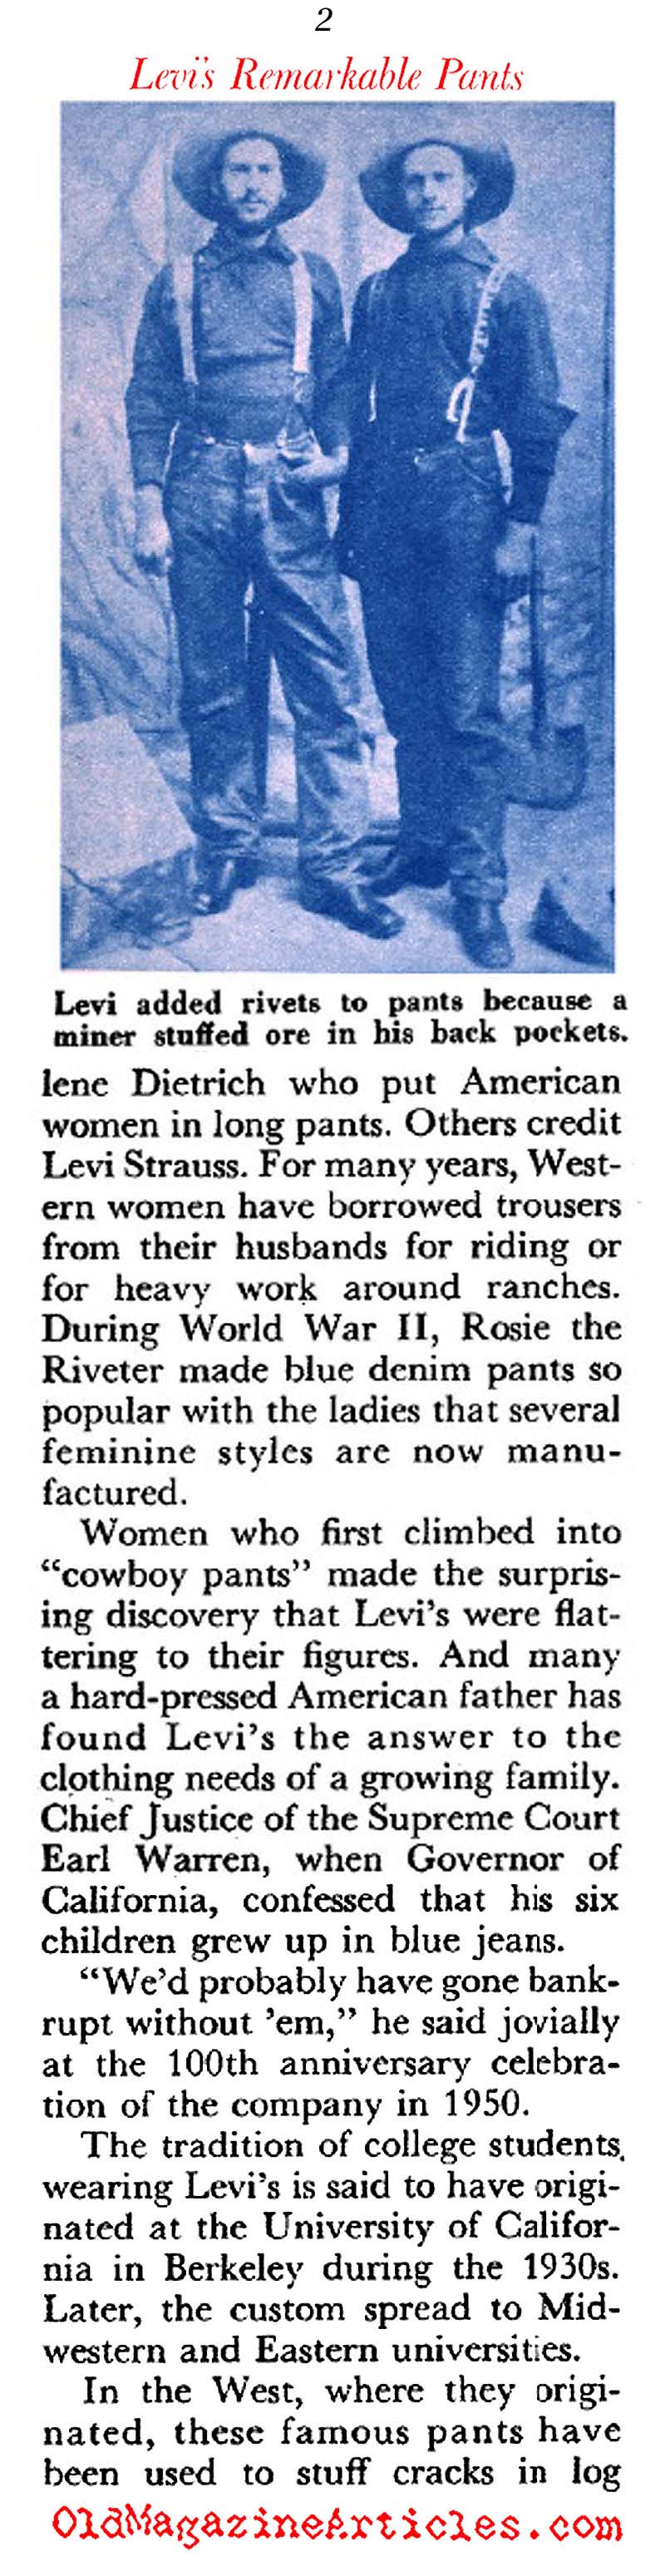 Levi Strauss and his Denim (Coronet Magazine, 1956)